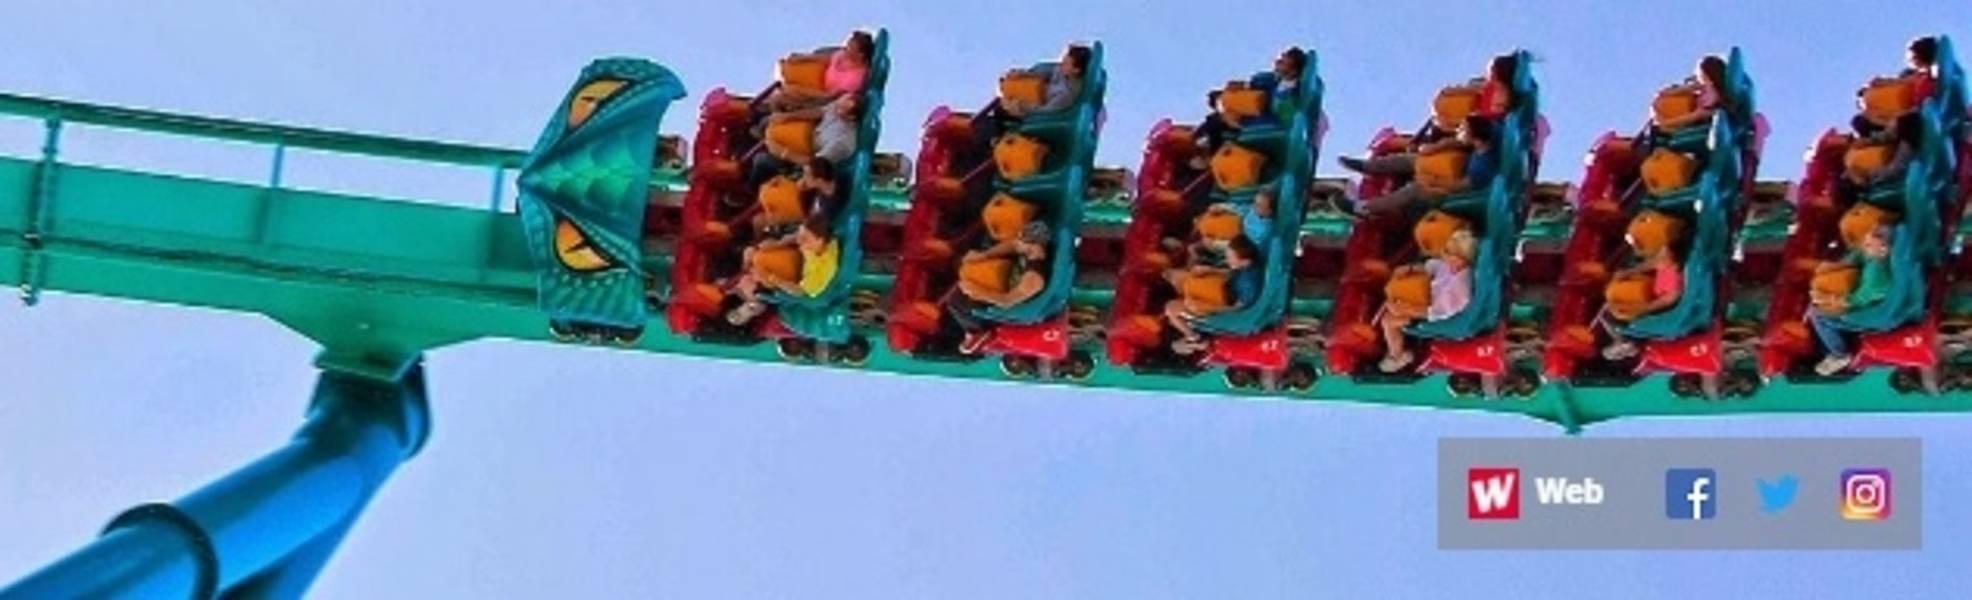 Virtual Roller Coasters26098